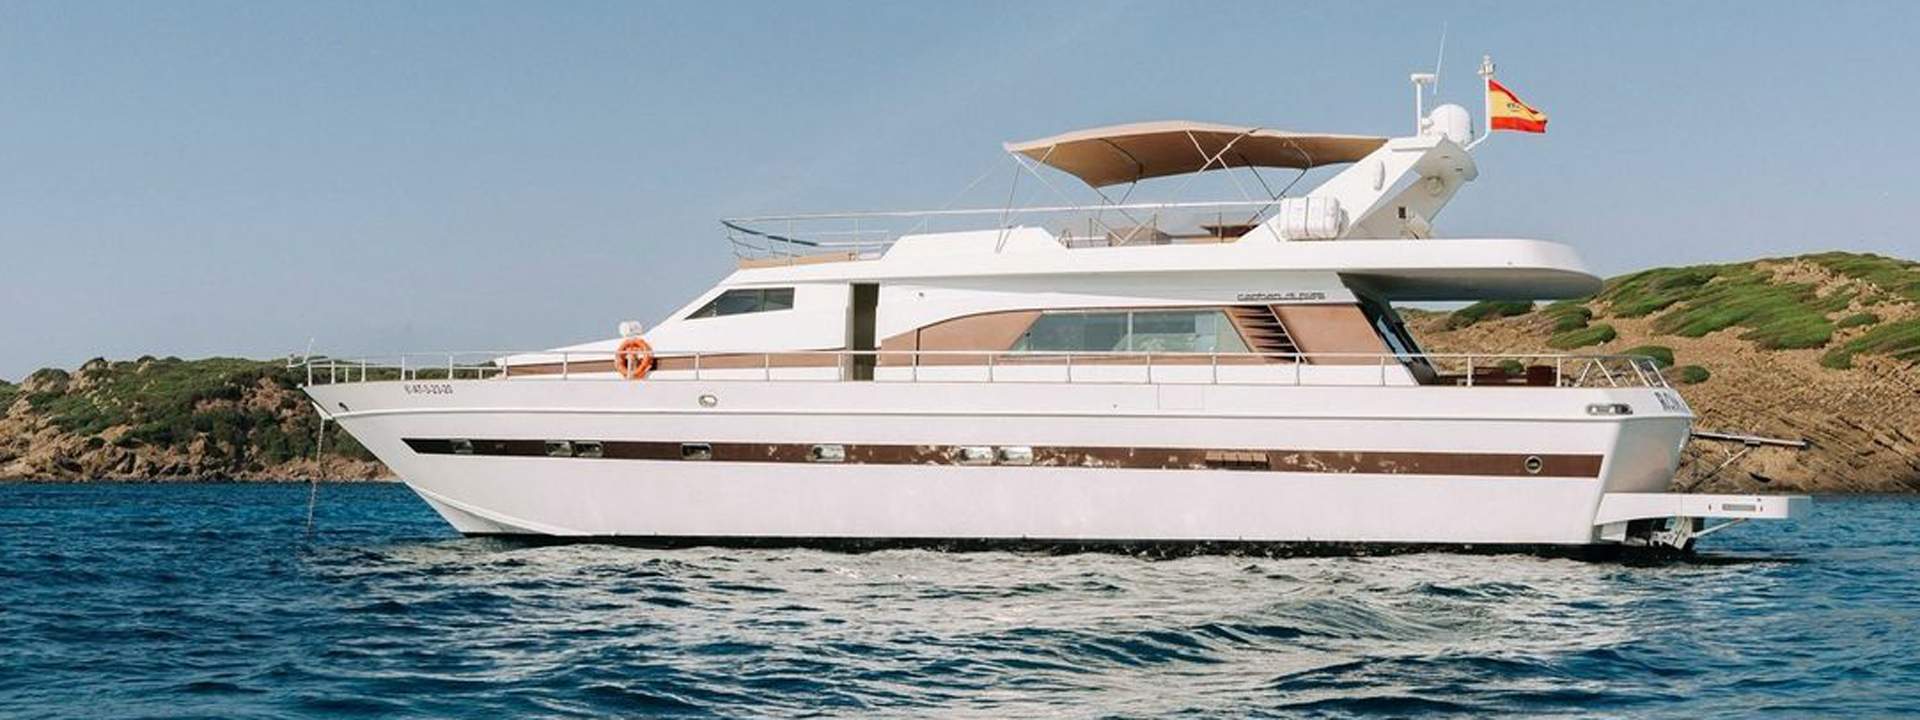 Luxury Yacht Akhir 22